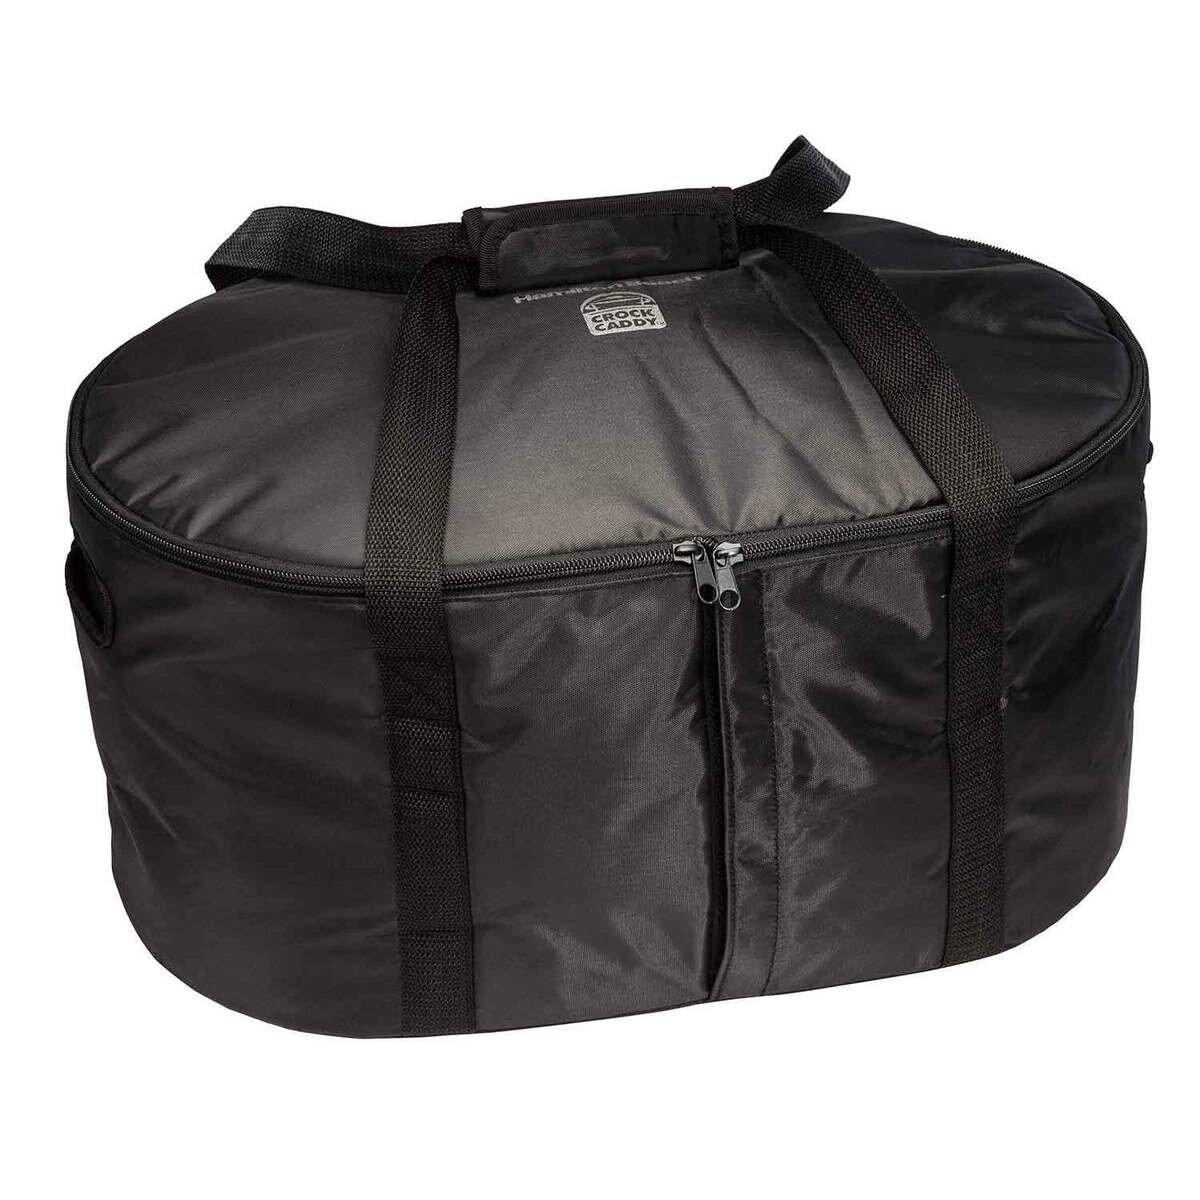 Food Storage Zipper Bags, Quart size, Value pack, 340 Count Zipper